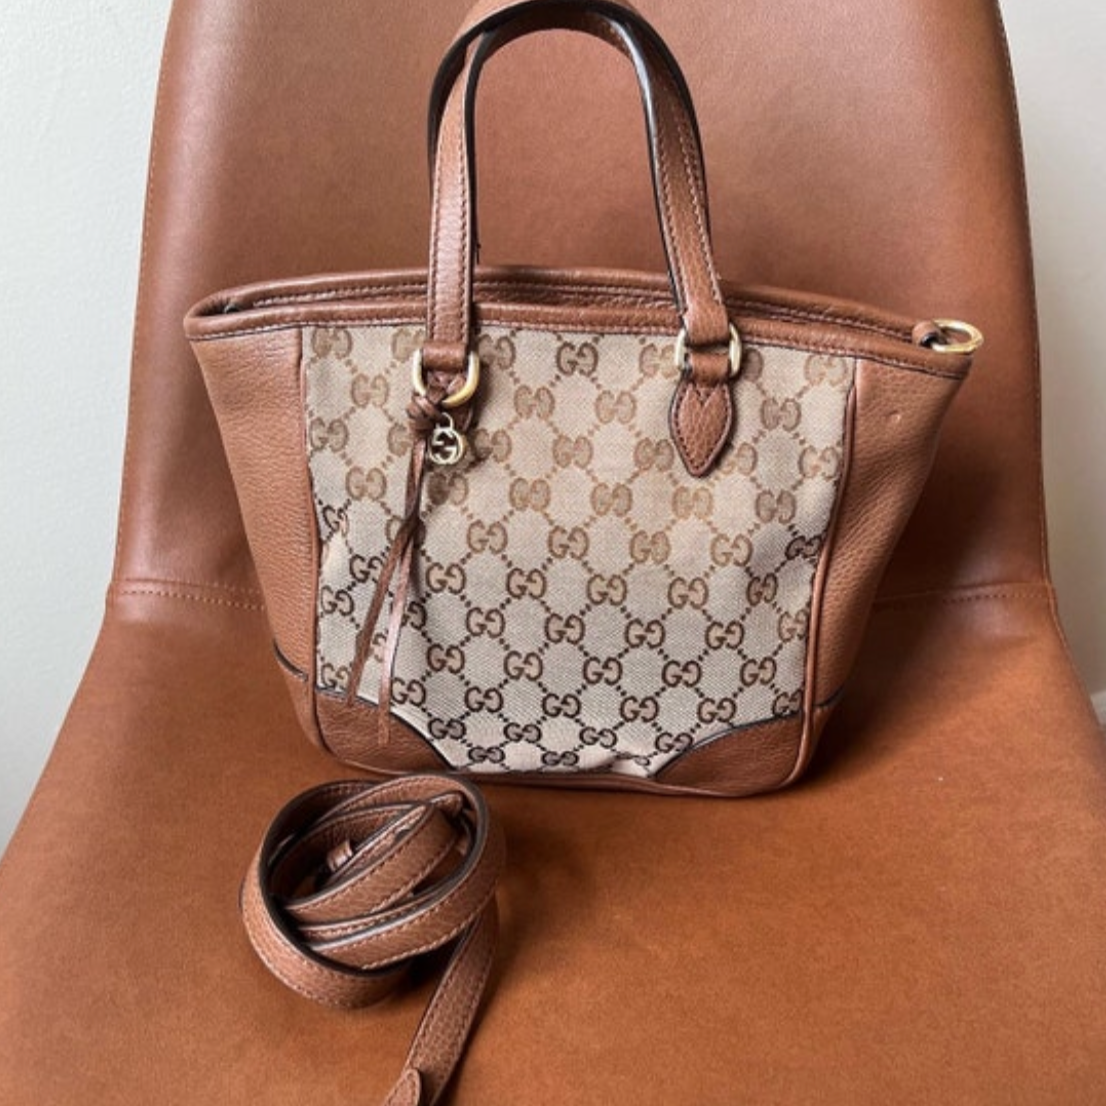 Gucci GG Original Web Tote Bag Tall